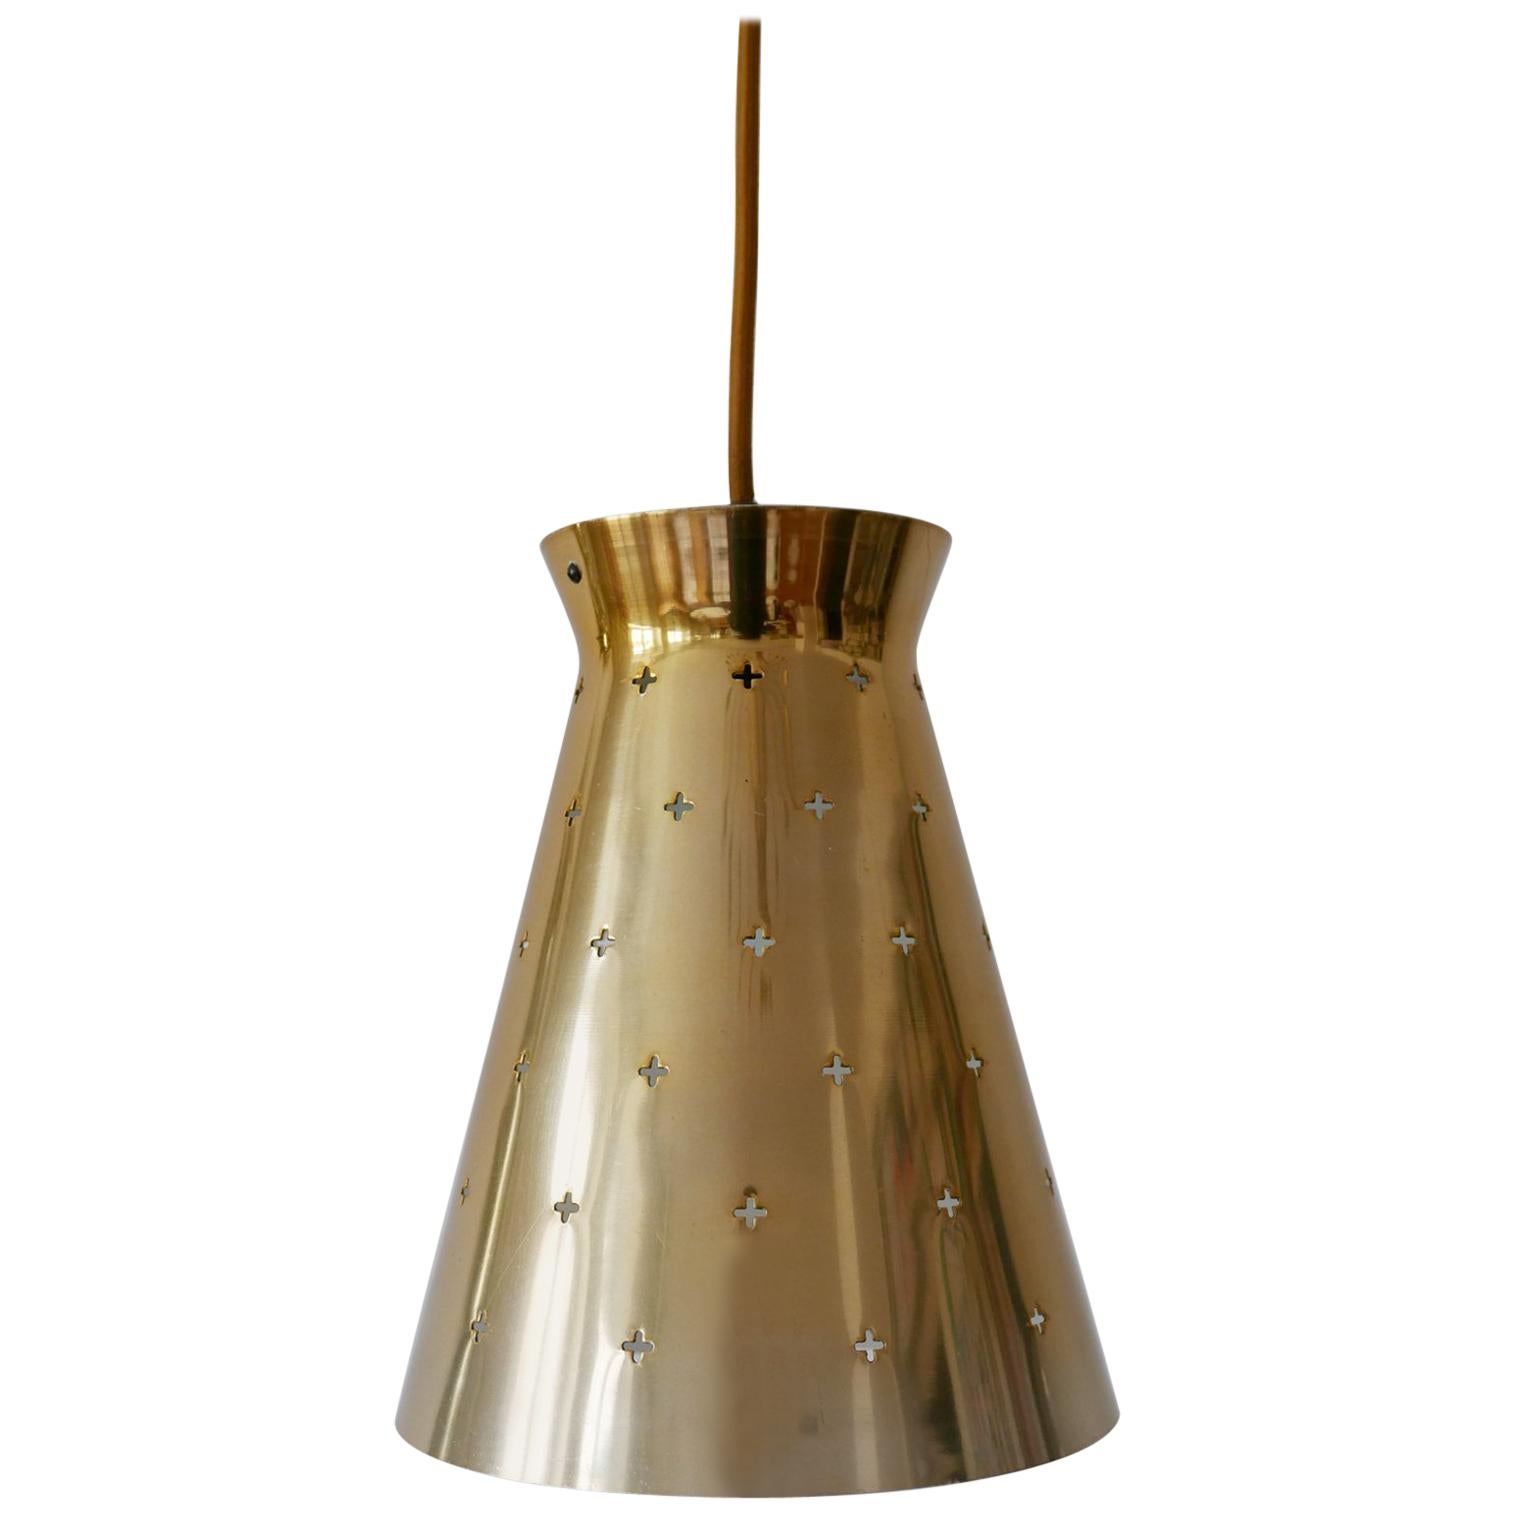 Lovely Mid-Century Modern Diabolo Pendant Lamp by Hillebrand, 1950s, Germany